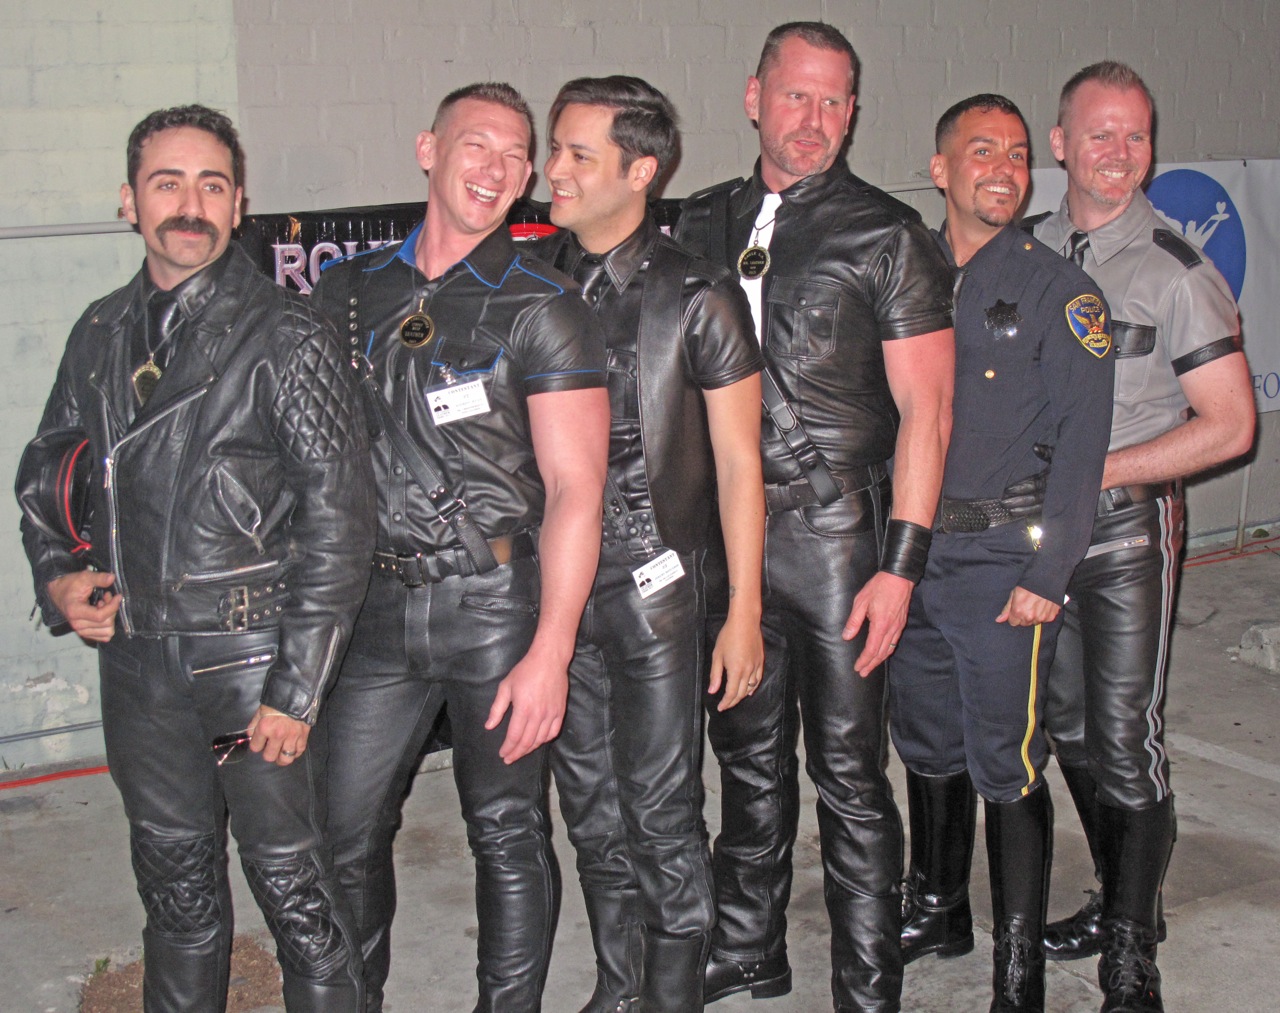 Fetish Men San Diego: Review of Los Angeles Leather Pride 2013